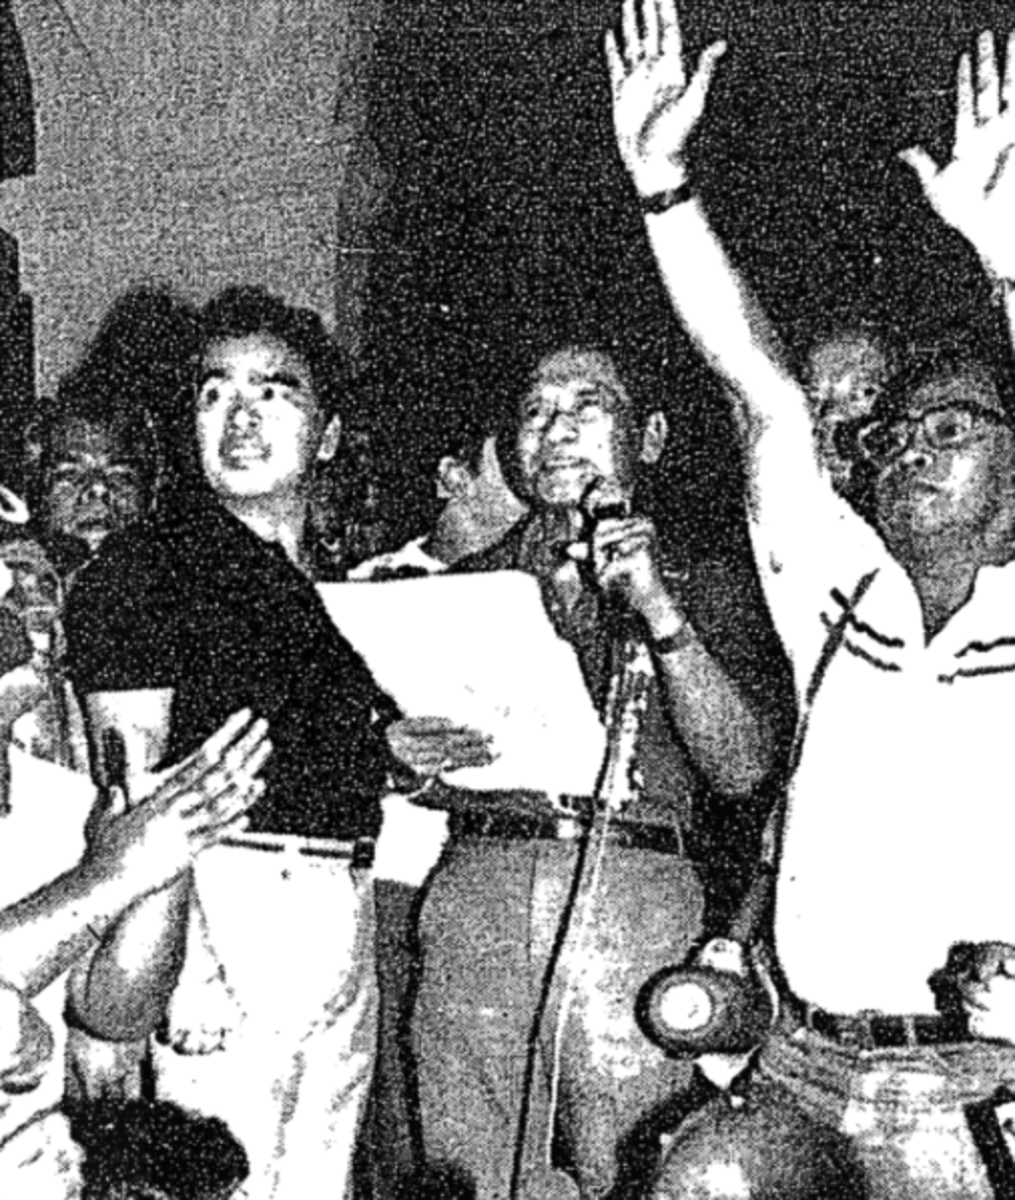 Arturo M. Tolentino, center, proclaiming himself acting president on behalf of former President Ferdinand Marcos in Manilla, July 6, 1986